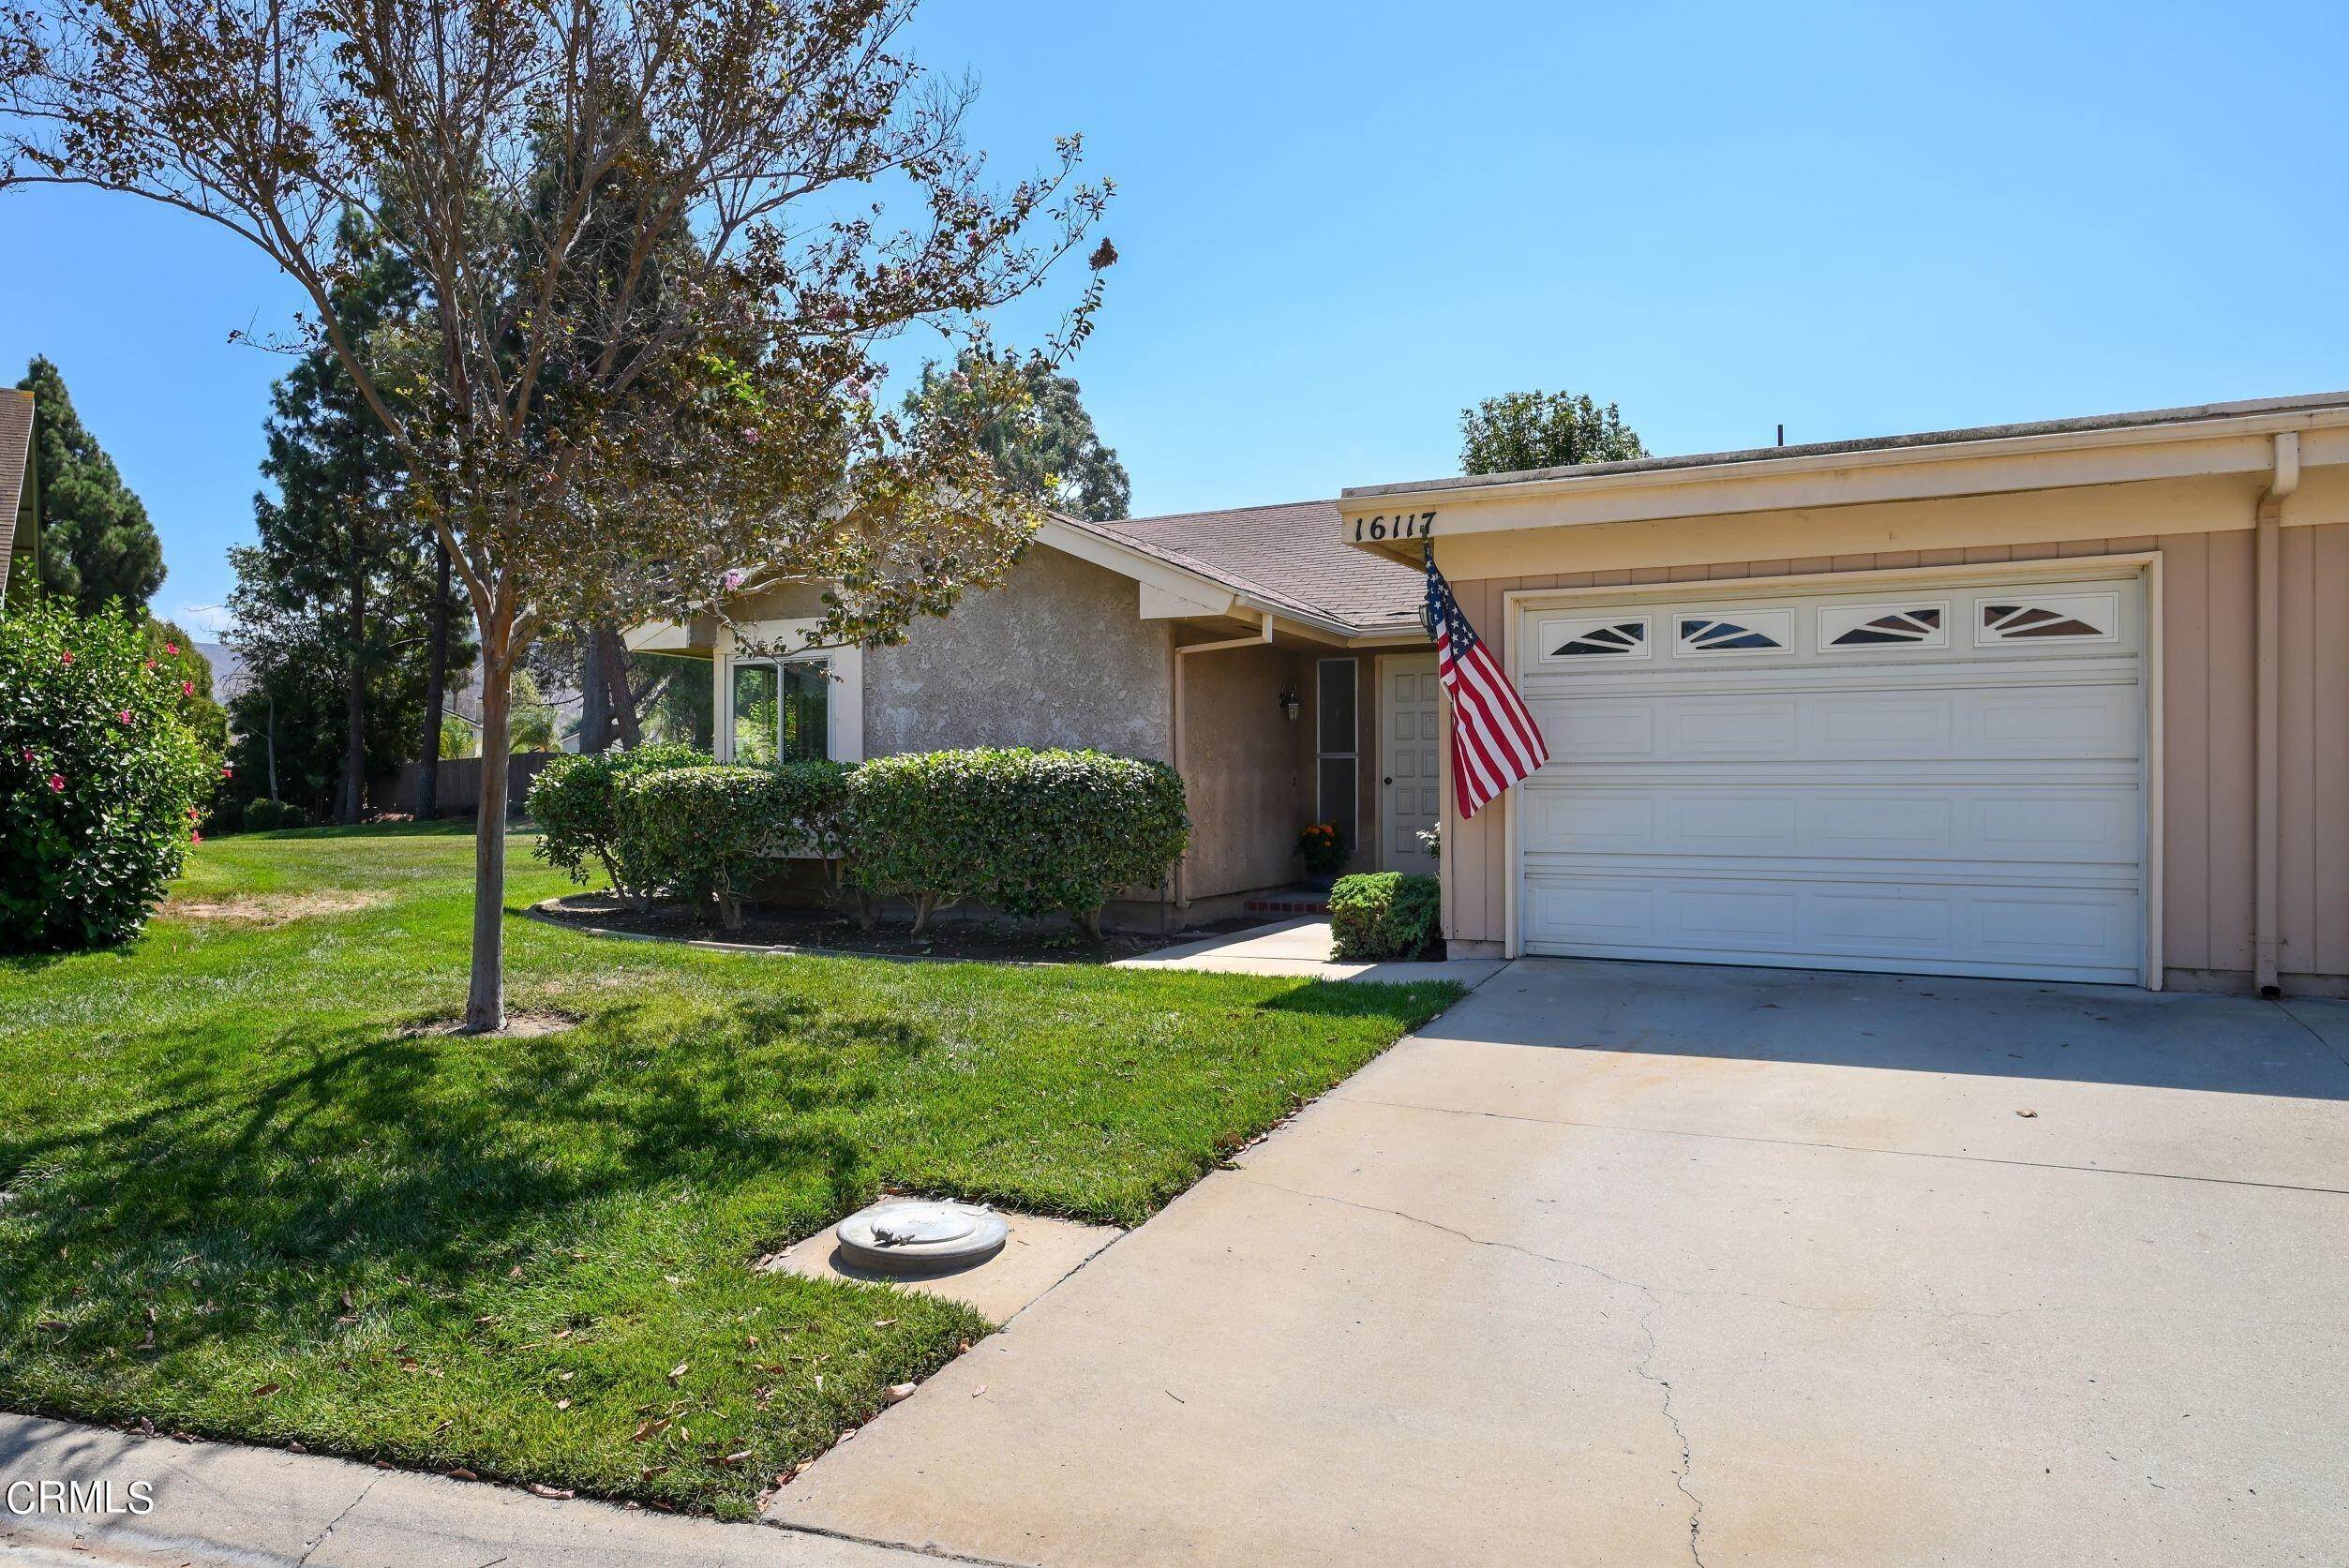 1. Single Family Homes for Sale at 16117 Village 16 Camarillo, California 93012 United States